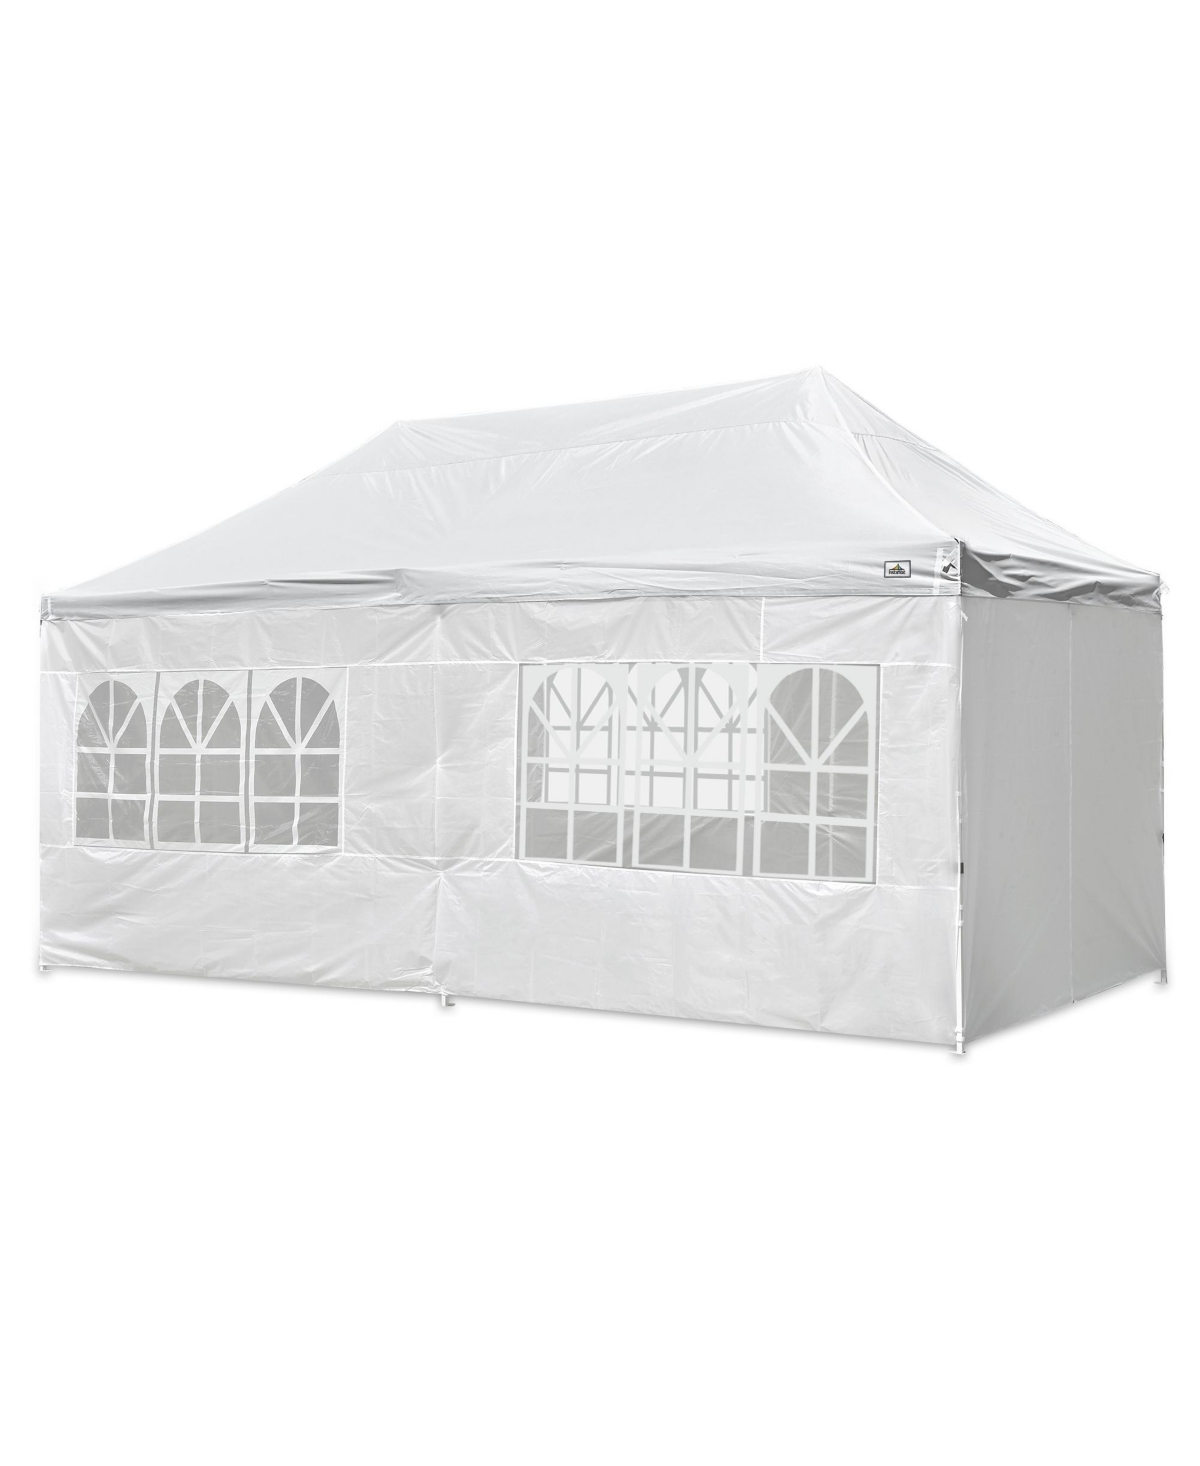 10x20FT Canopy Wedding Party Tent Pop Up Folding Gazebo Outdoor w/ 4 Sidewalls & Bag White - White